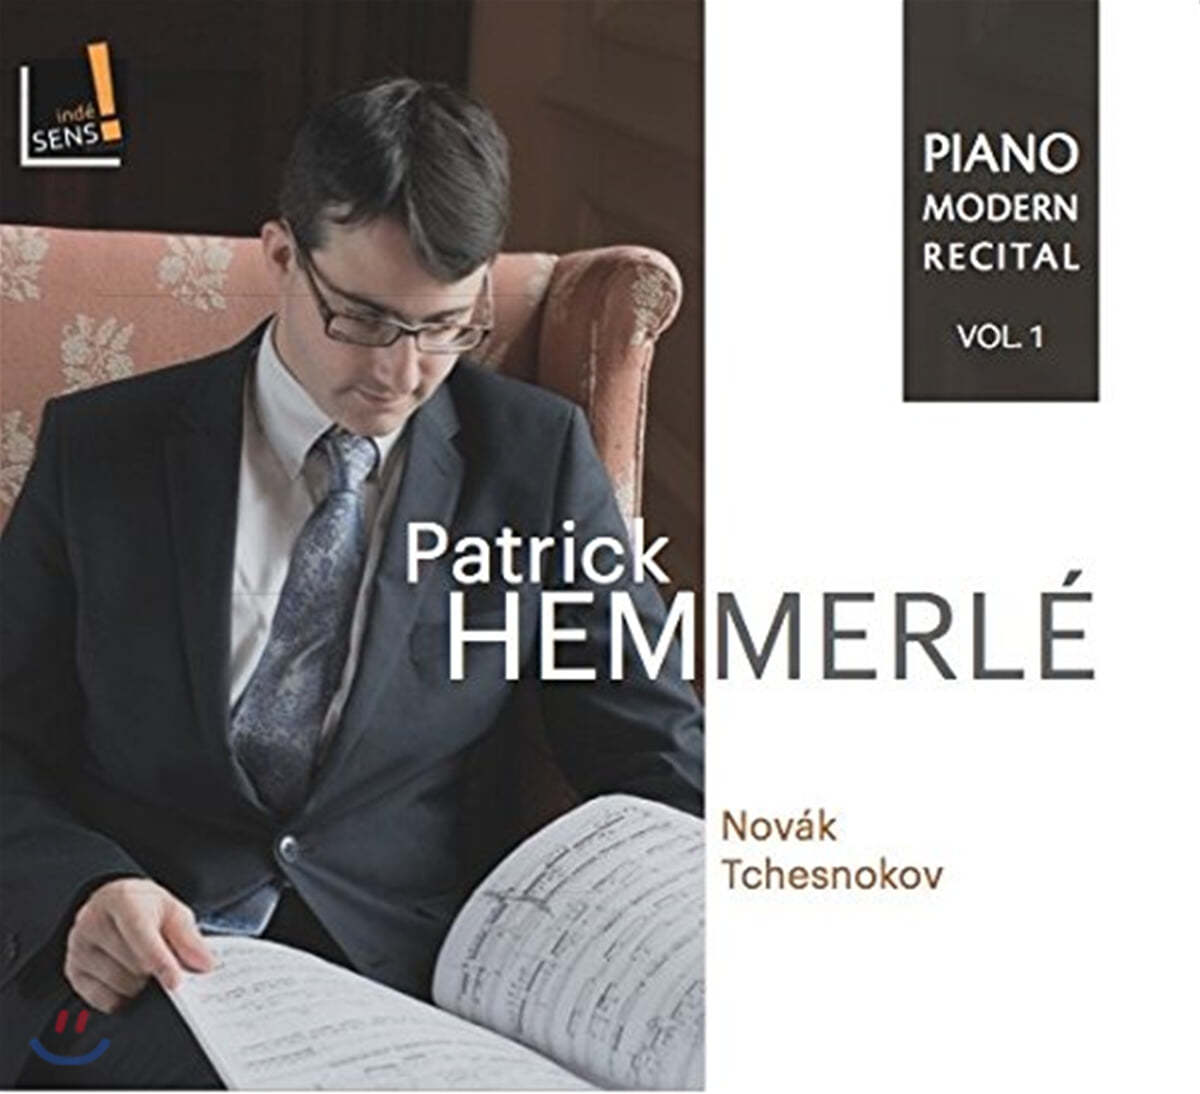 Patrick Hemmerle 피아노 리사이틀 1집 (Piano Modern Recital Vol. 1)